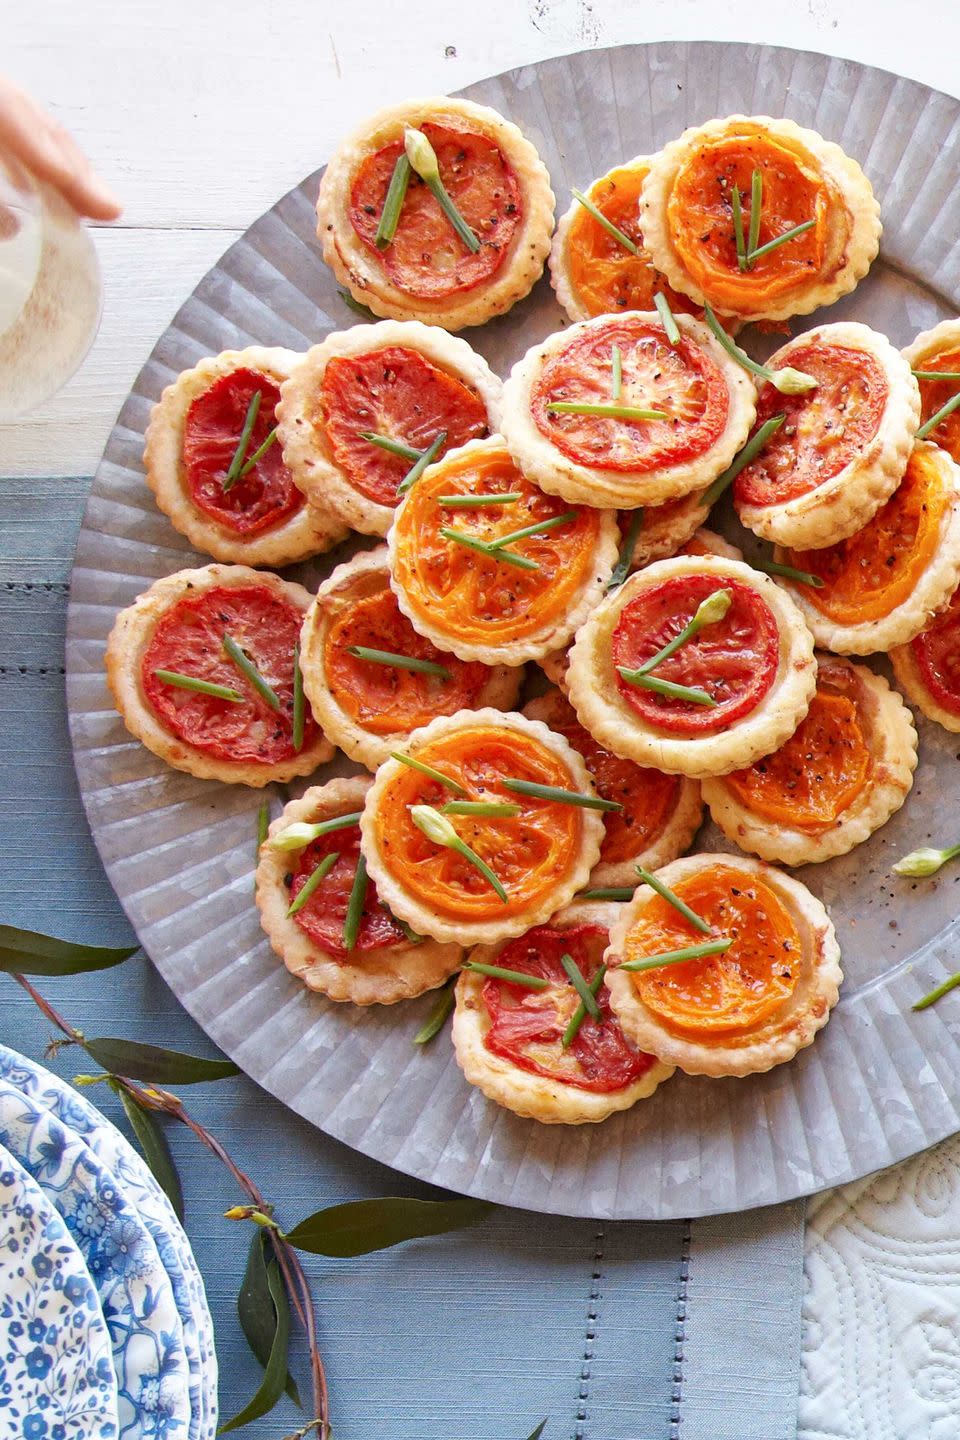 62) Tomato-Manchego Tartlets